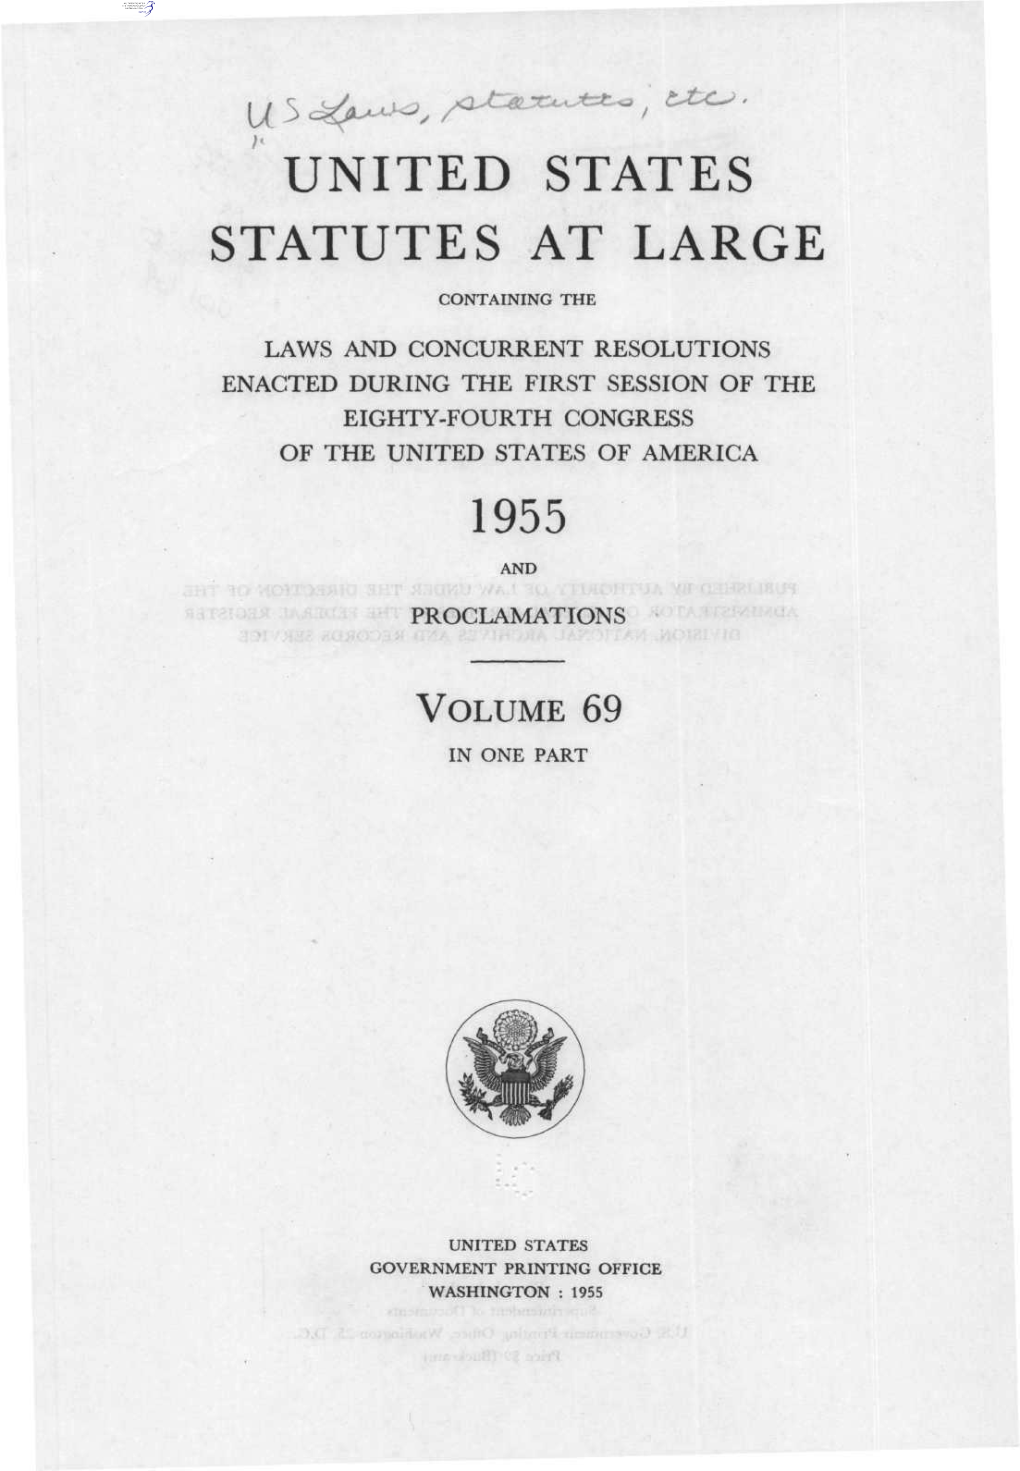 ' United States Statutes at Large 1955